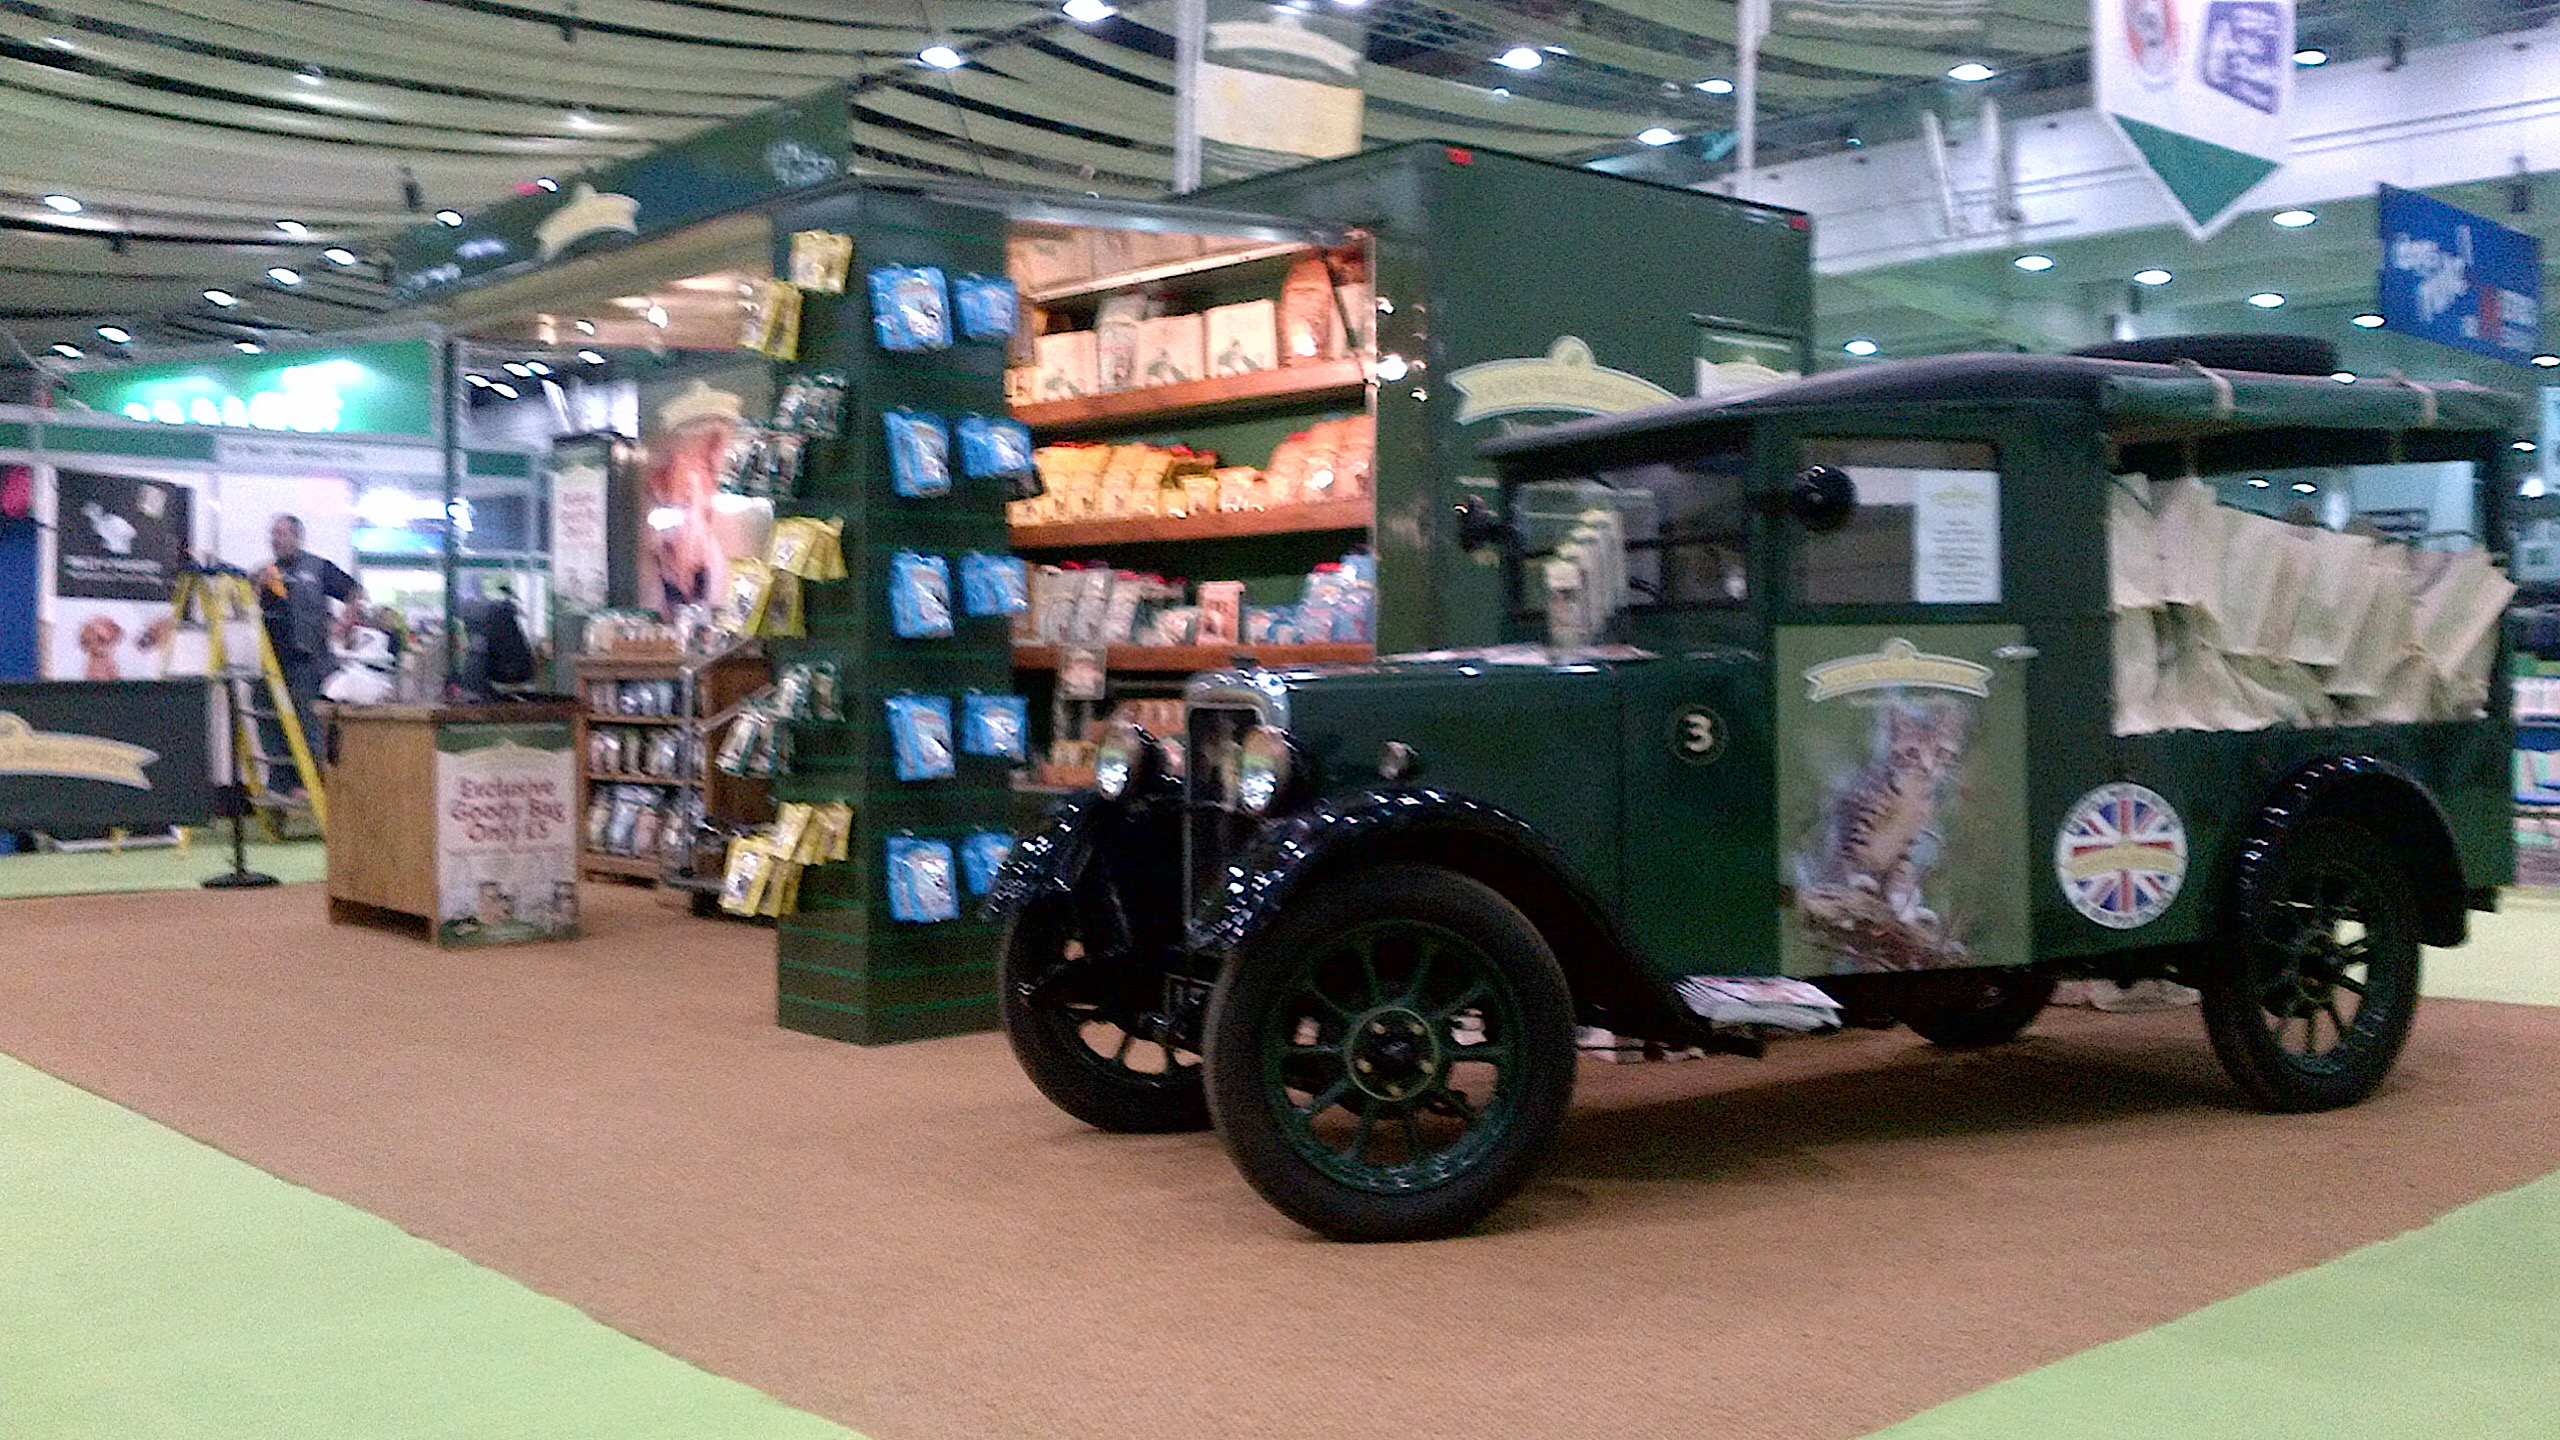 exhibition display vehicles refurbished vintage vehicles for exhibitions & events. Outdoor & indoor venues